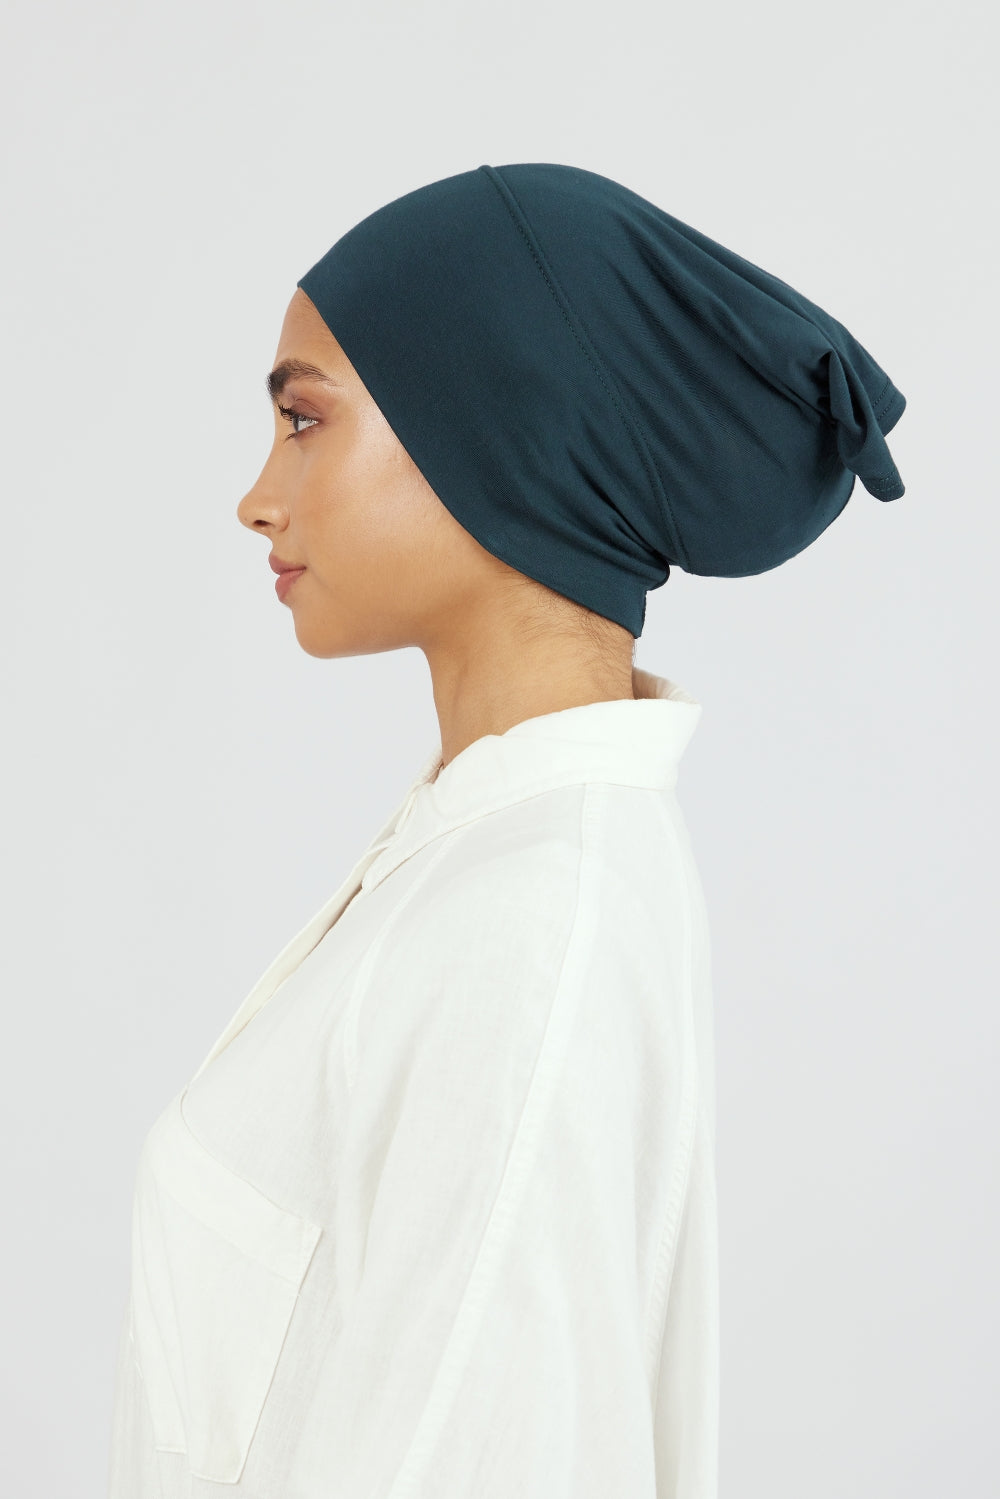 AE - Matching Chiffon Hijab Set - Midnight Teal